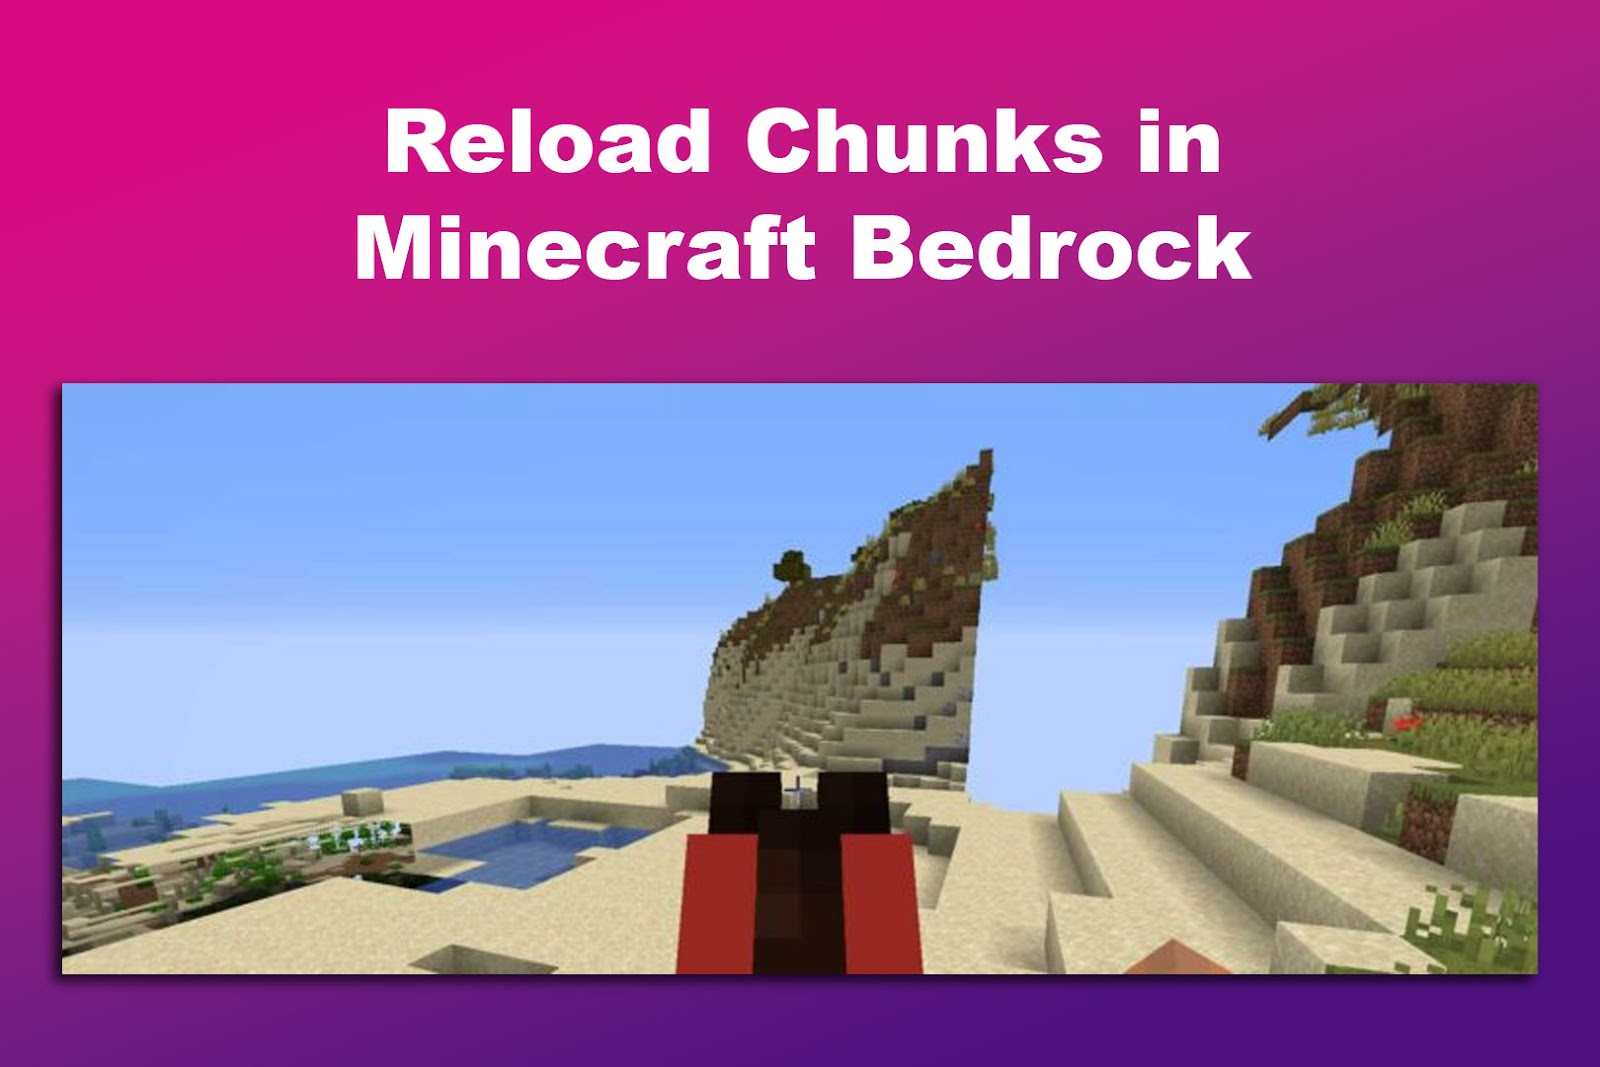 Reload Chunks in Minecraft Bedrock